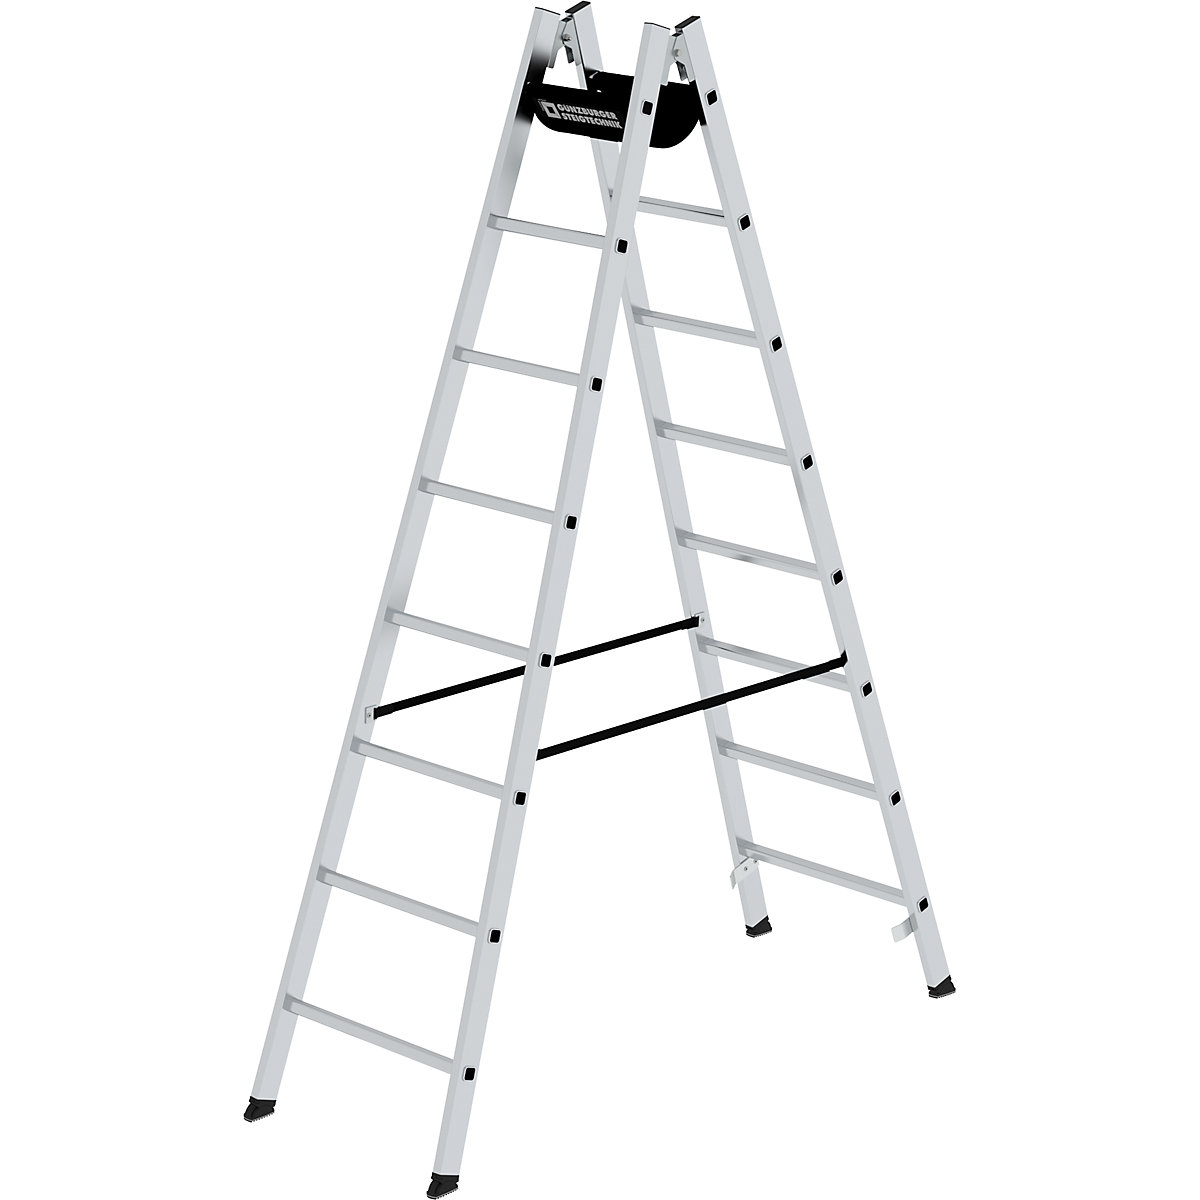 Safety rung ladder, double sided access – MUNK, rungs 30 x 30 mm, non-slip, 2x8 rungs-10